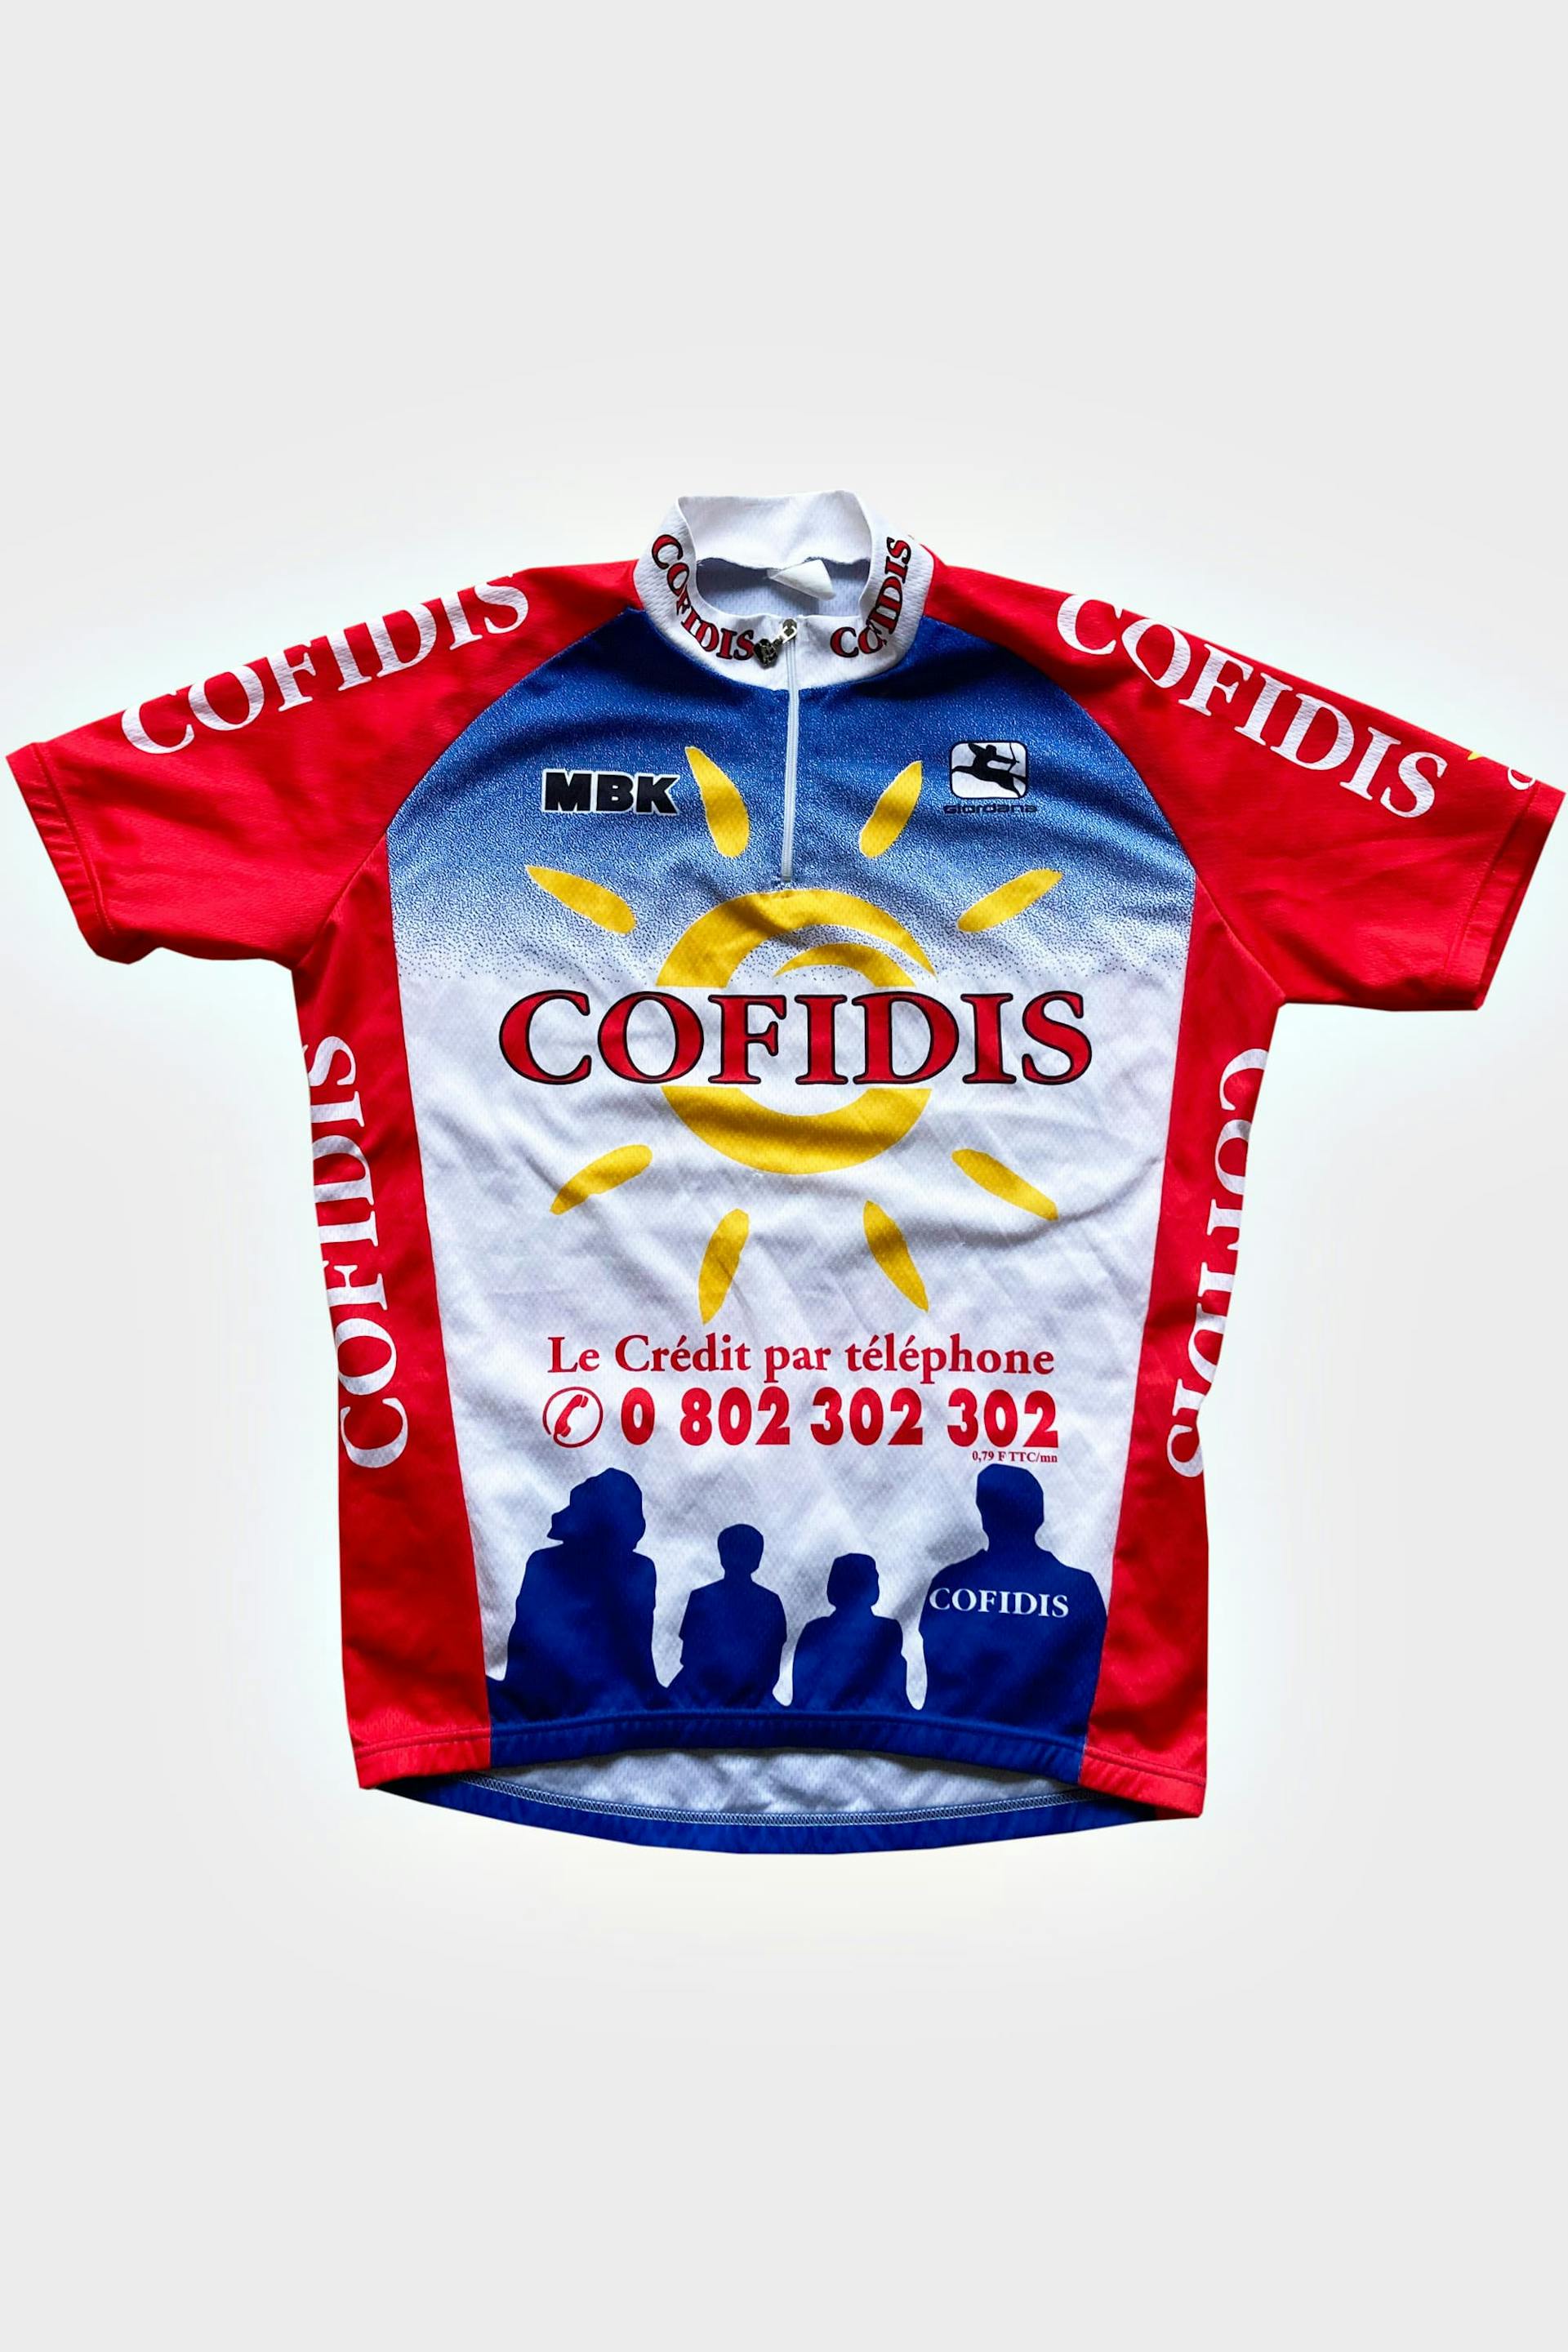 Team Confidis ABK Jersey by Giordana 2000